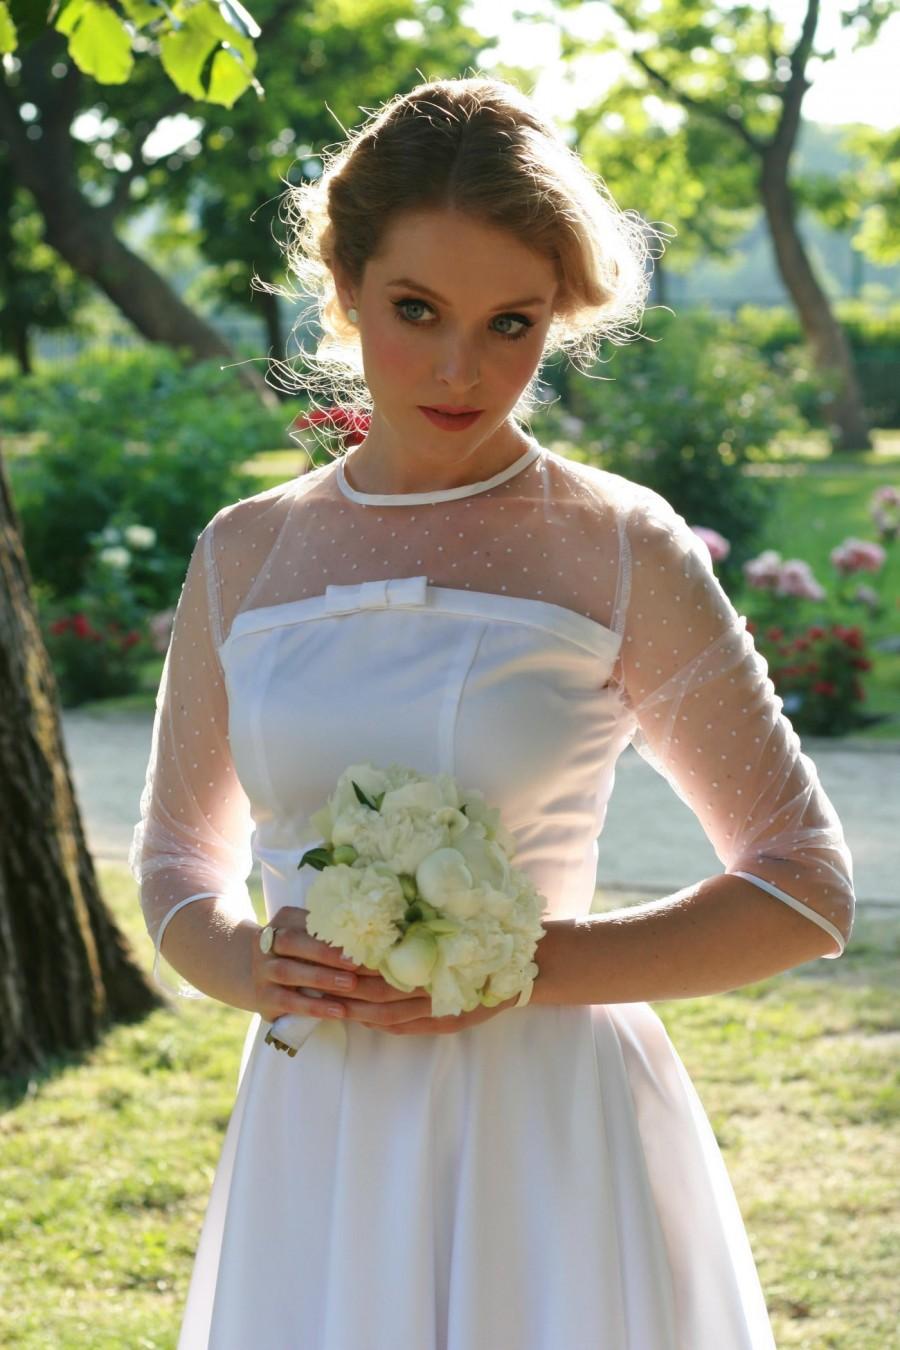 Wedding - Lana Wedding Dress: vintage style / pin-up / rockabilly bride dress by TiCCi Rockabilly Clothing